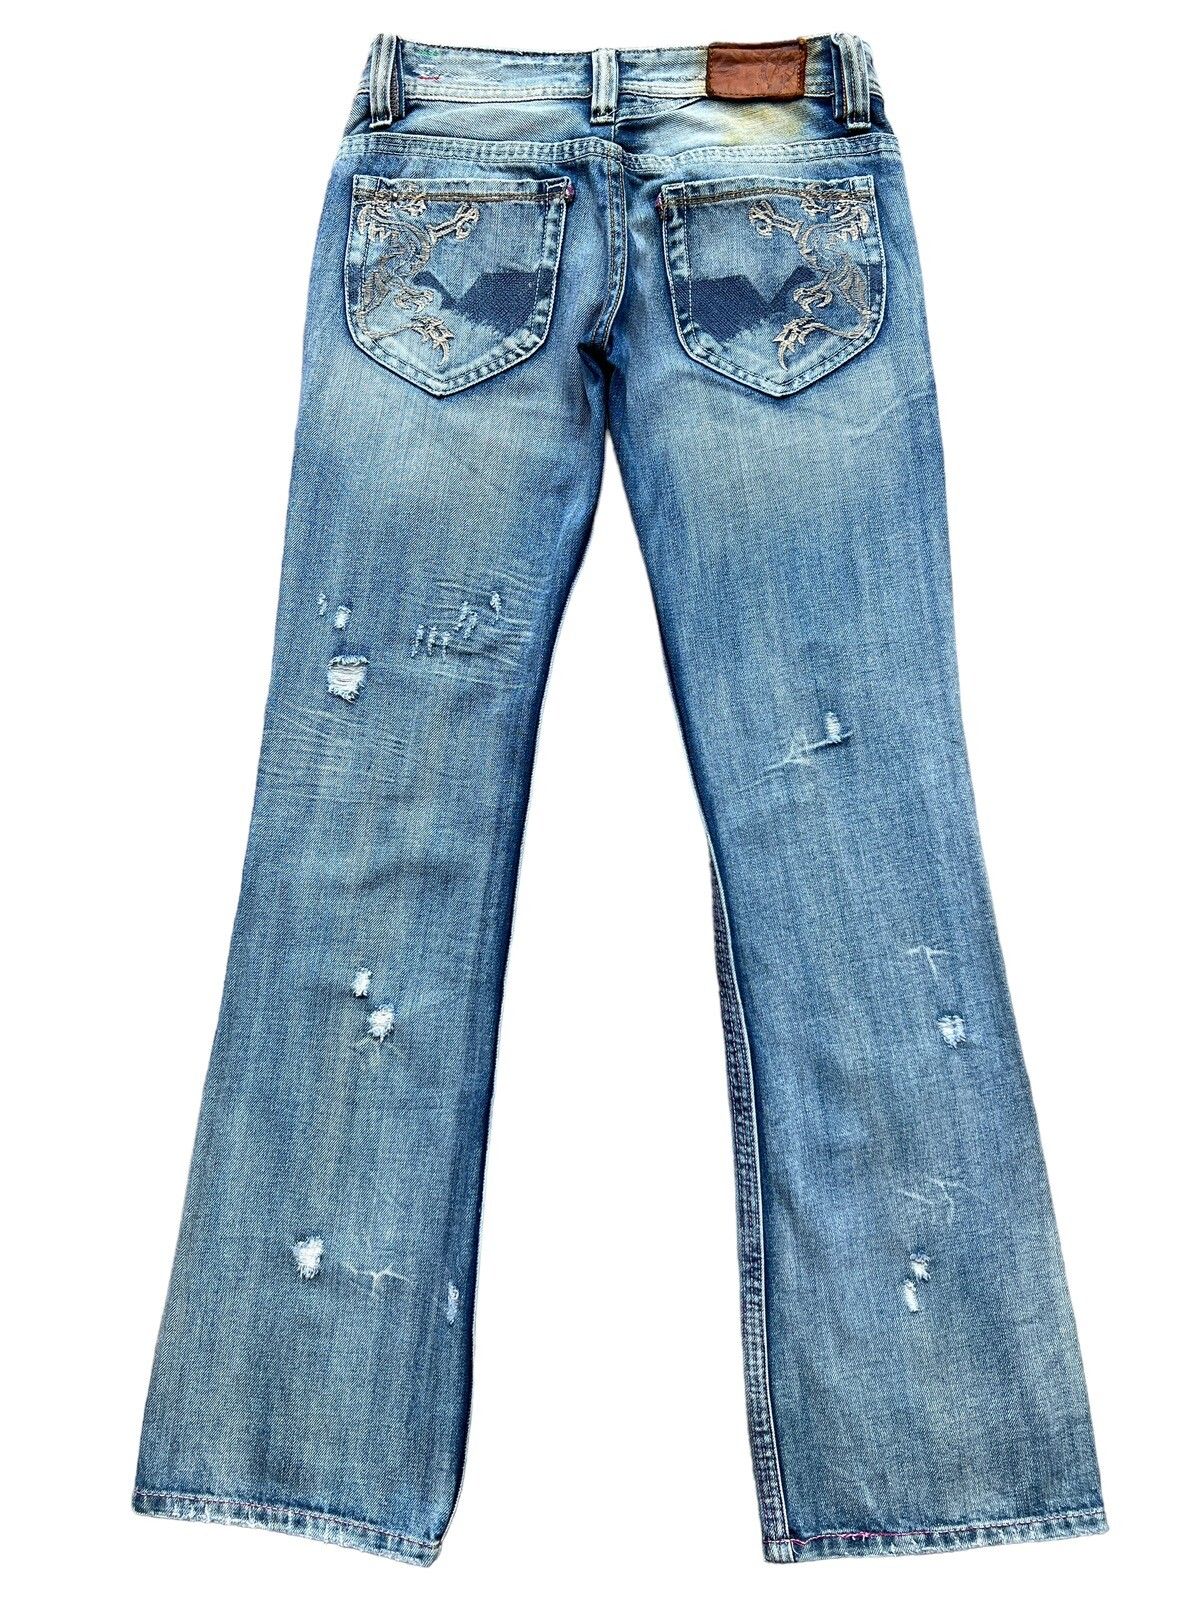 Vintage Diesel Leather Distressed Flare Lowrise Jeans 30x33 - 3